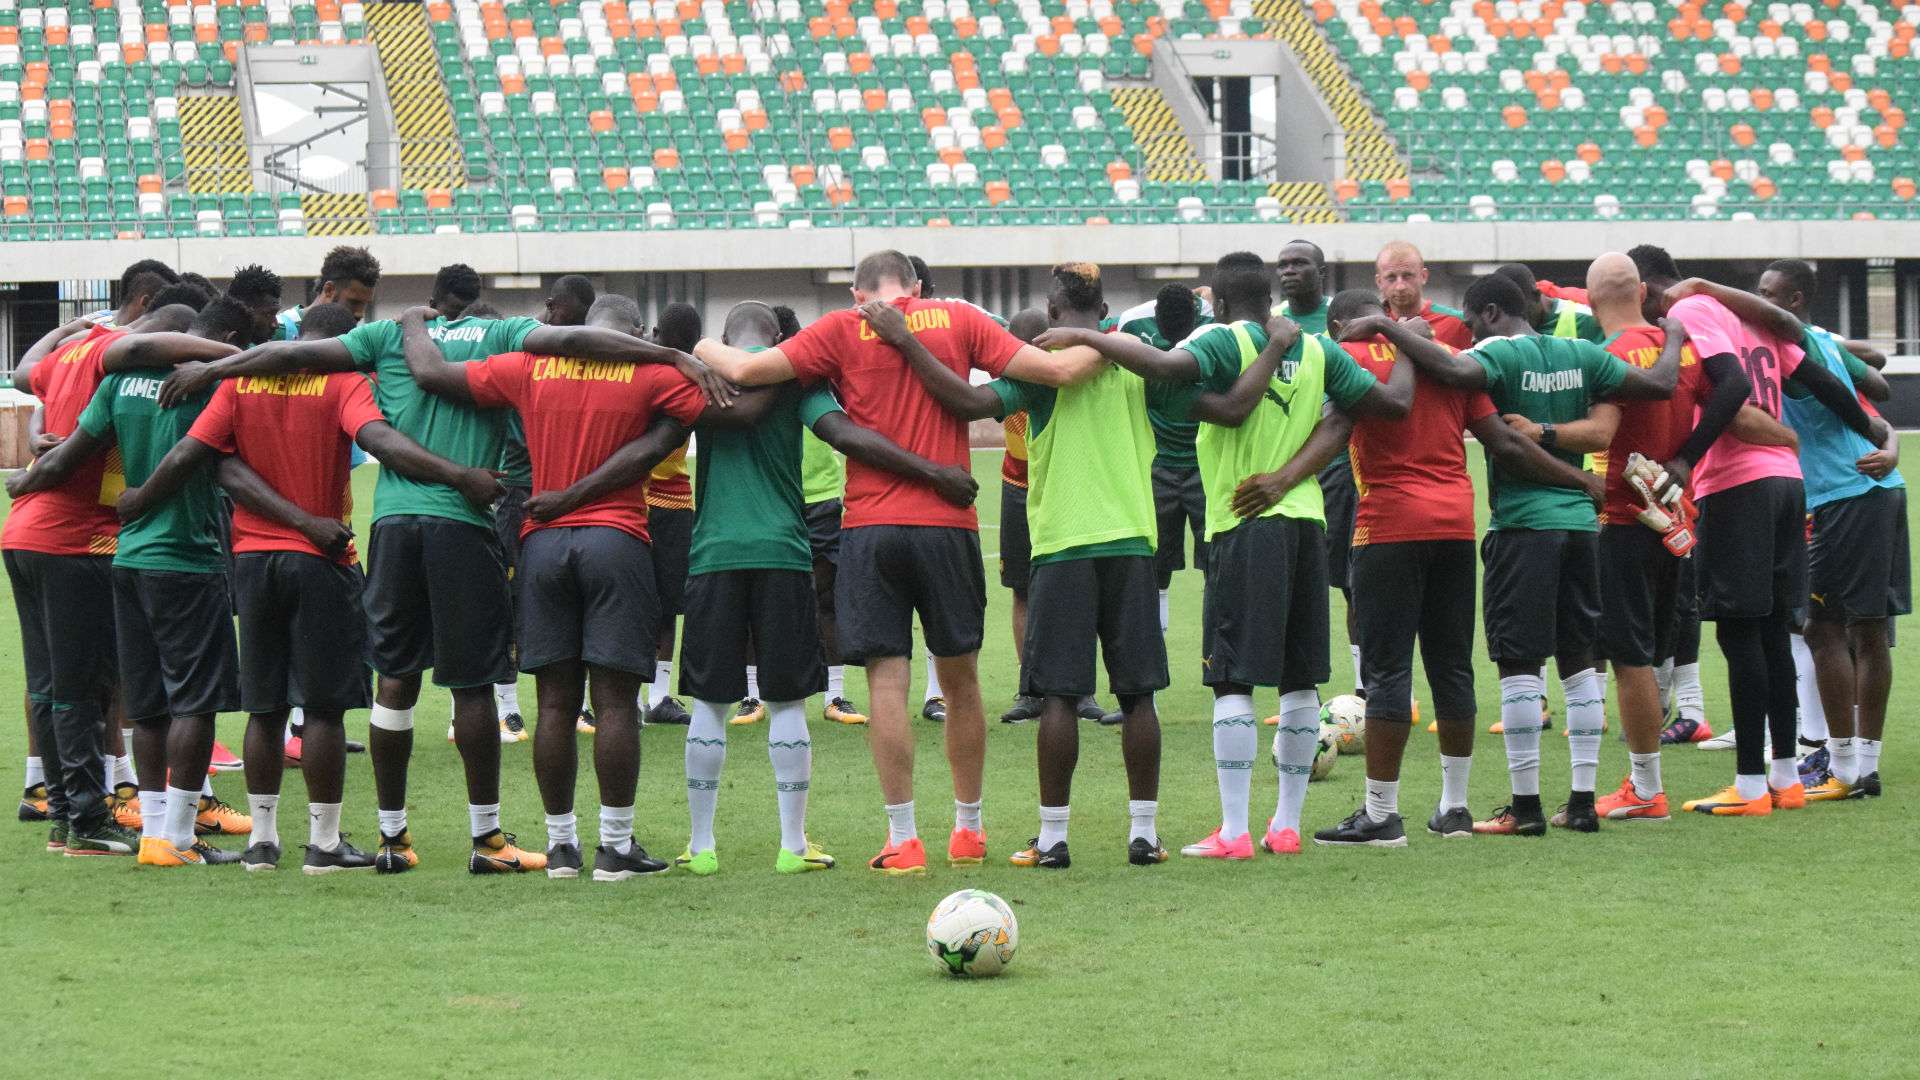 Cameroon team